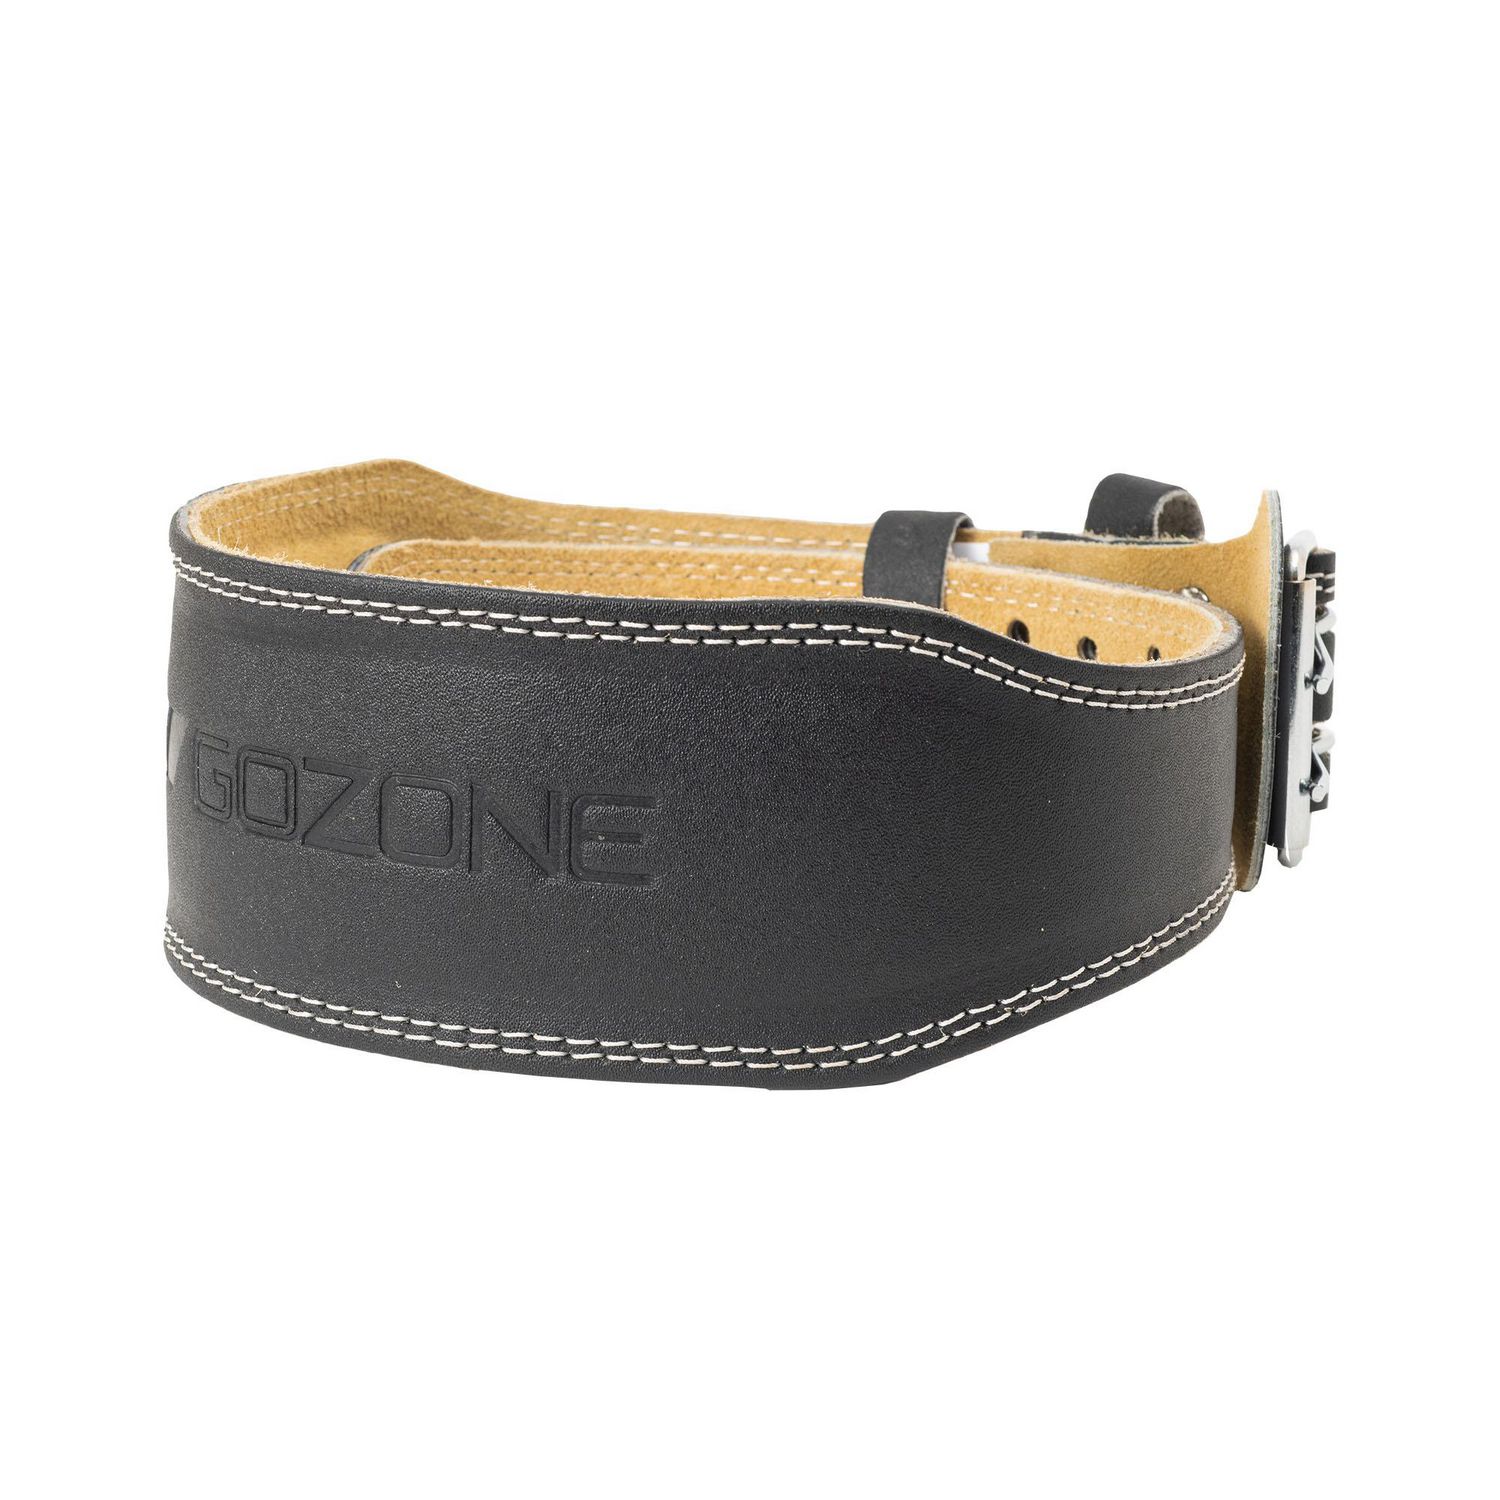 GoZone SM/MD Leather Weight Belt – Black, Interior foam padding